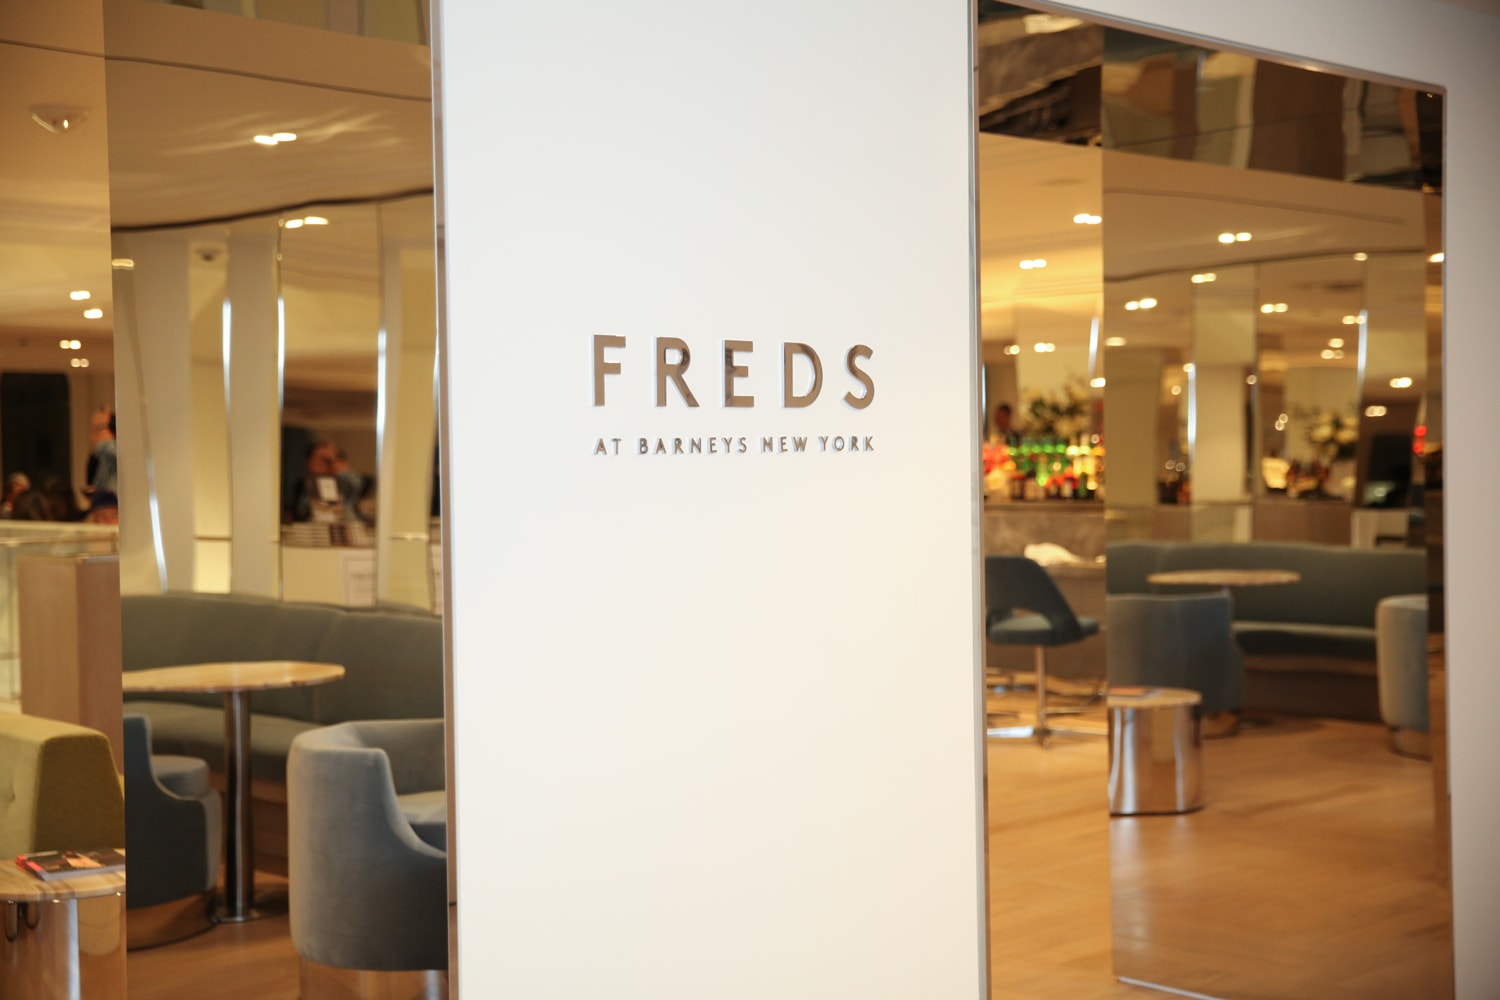 Barneys Restaurant Freds Remain Open Despite Liquidation Authentic Brands Info Food 